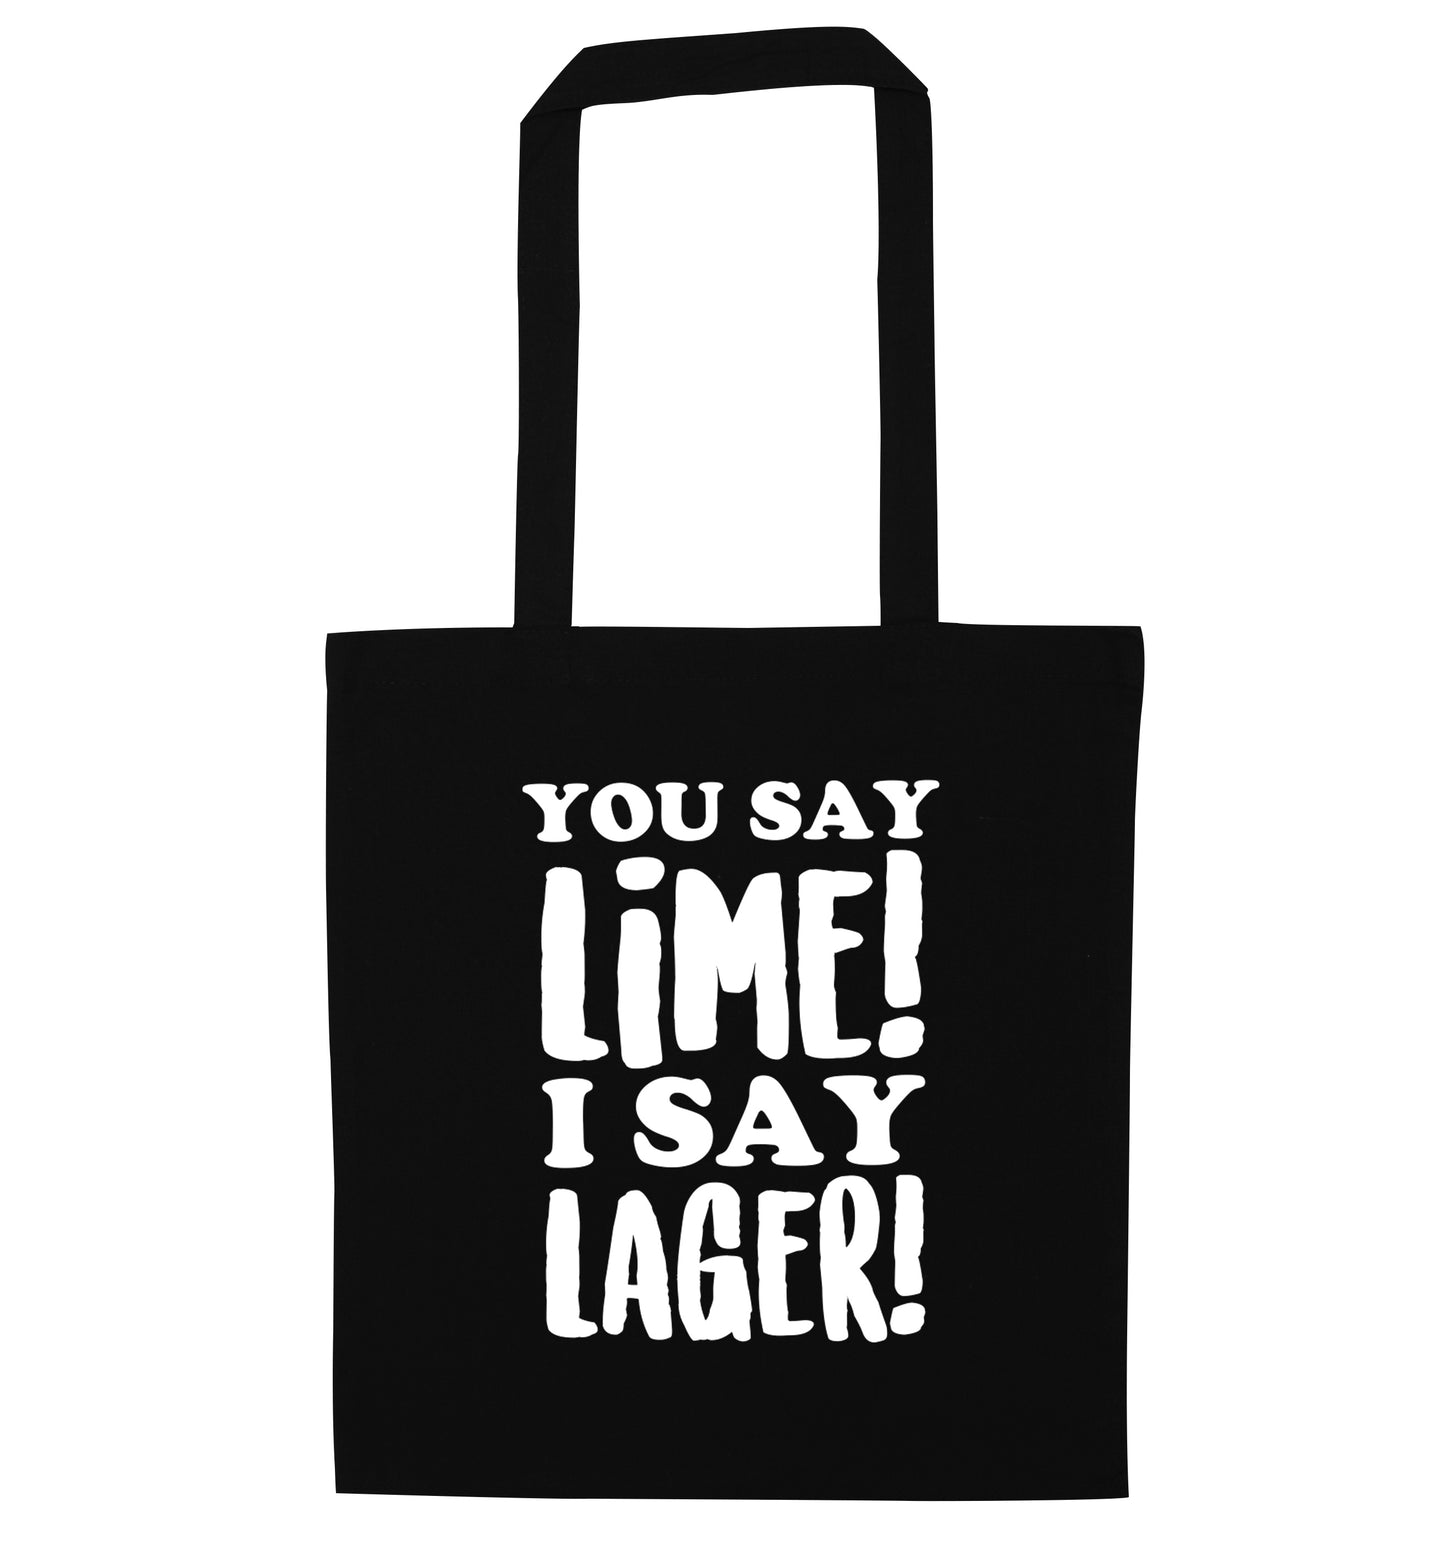 You say lime I say lager! black tote bag